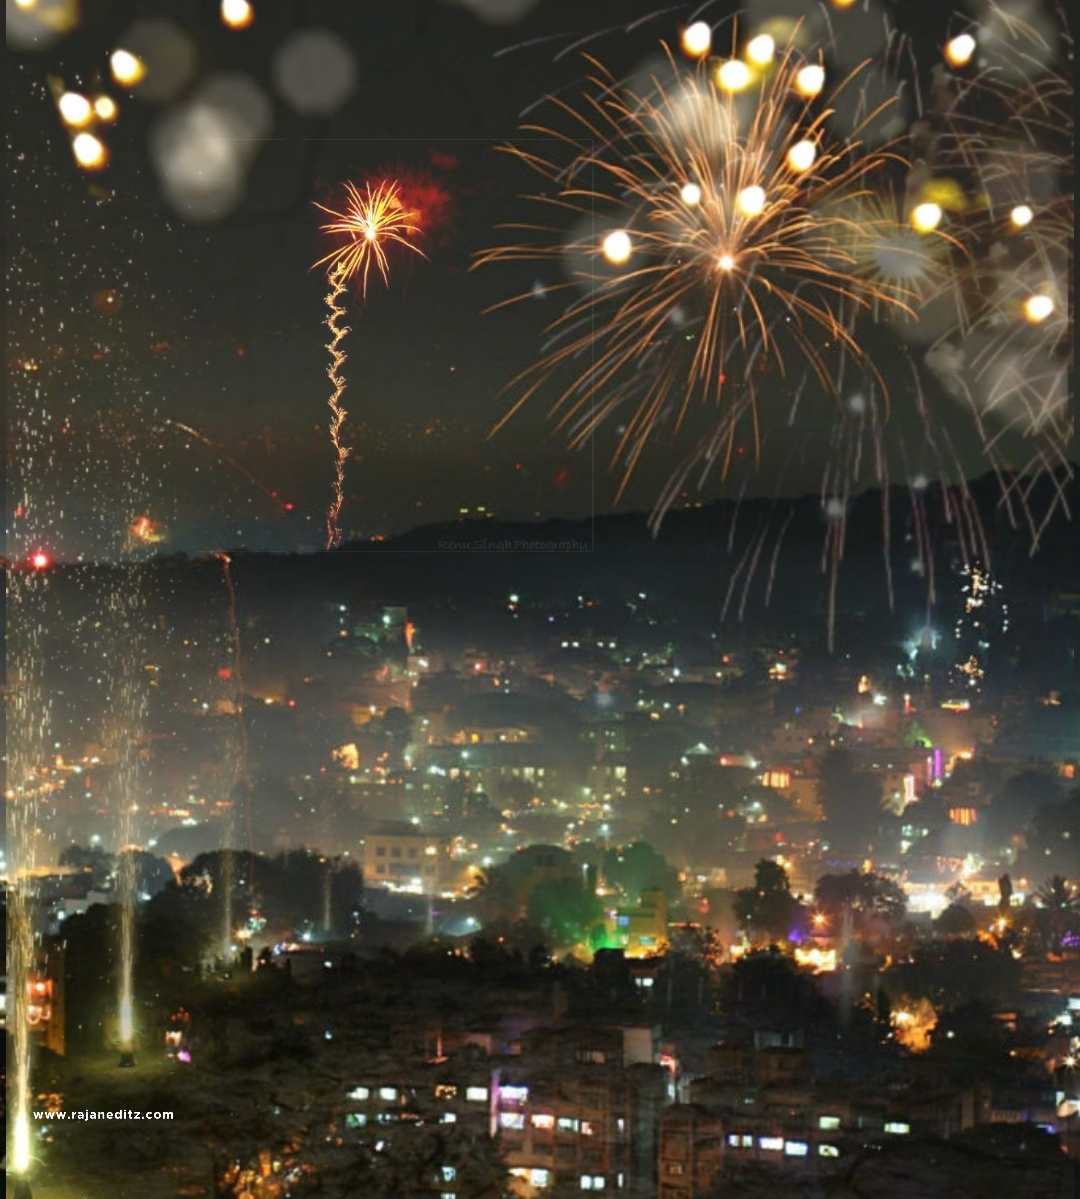 diwali background editing_Diwali editing background_Rajan editz_diwali 